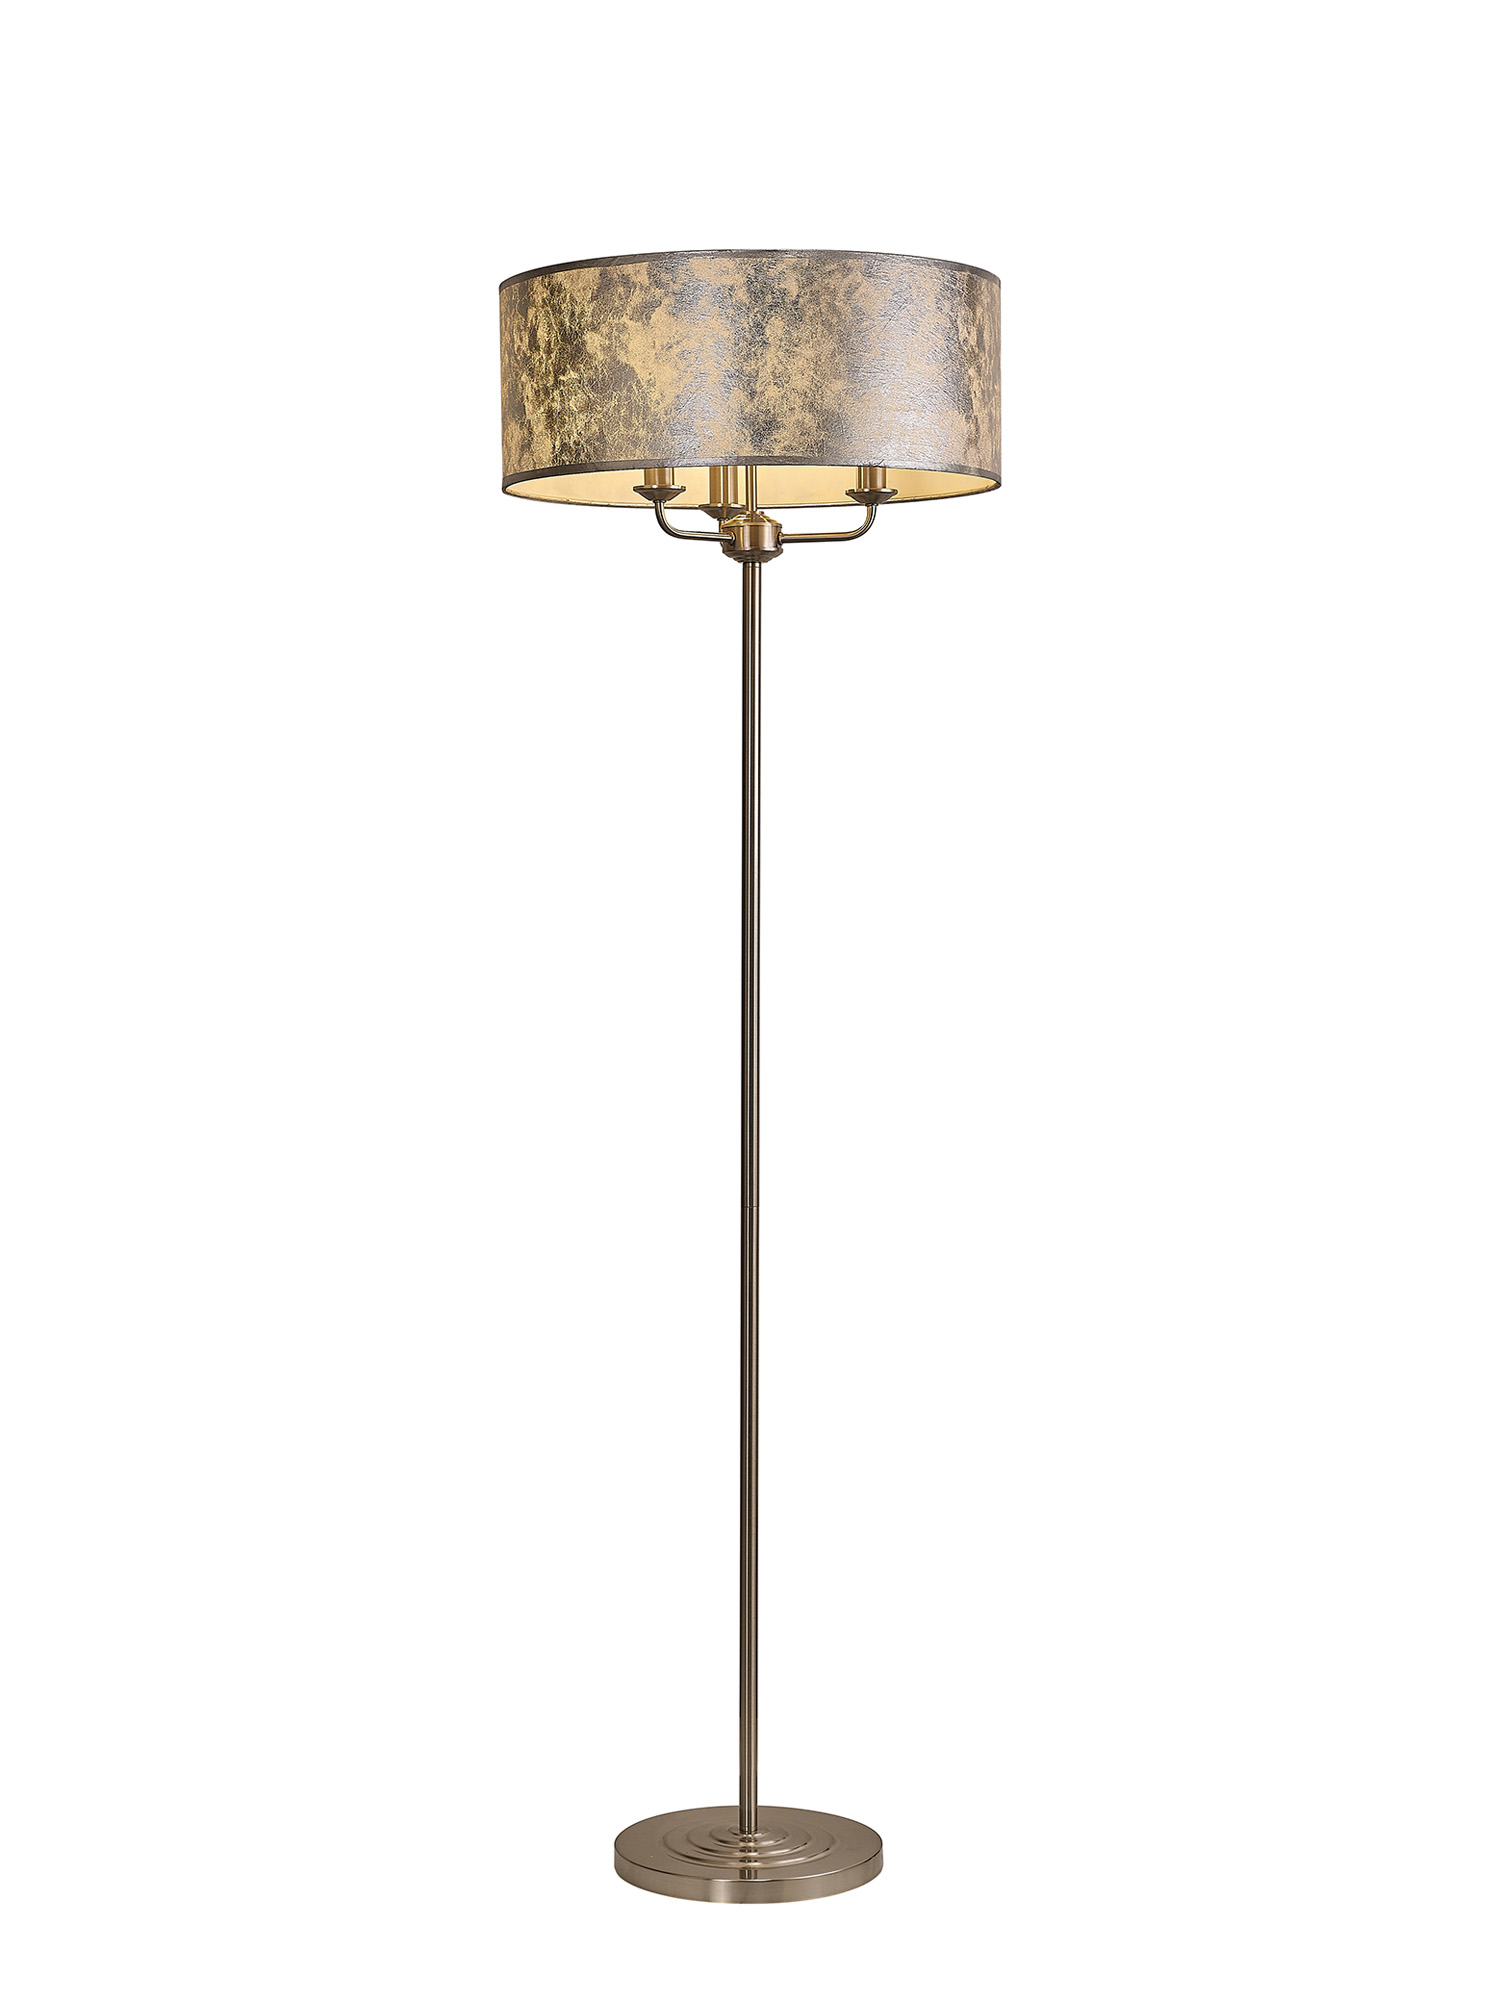 DK0940  Banyan 45cm 3 Light Floor Lamp Satin Nickel; Silver Leaf